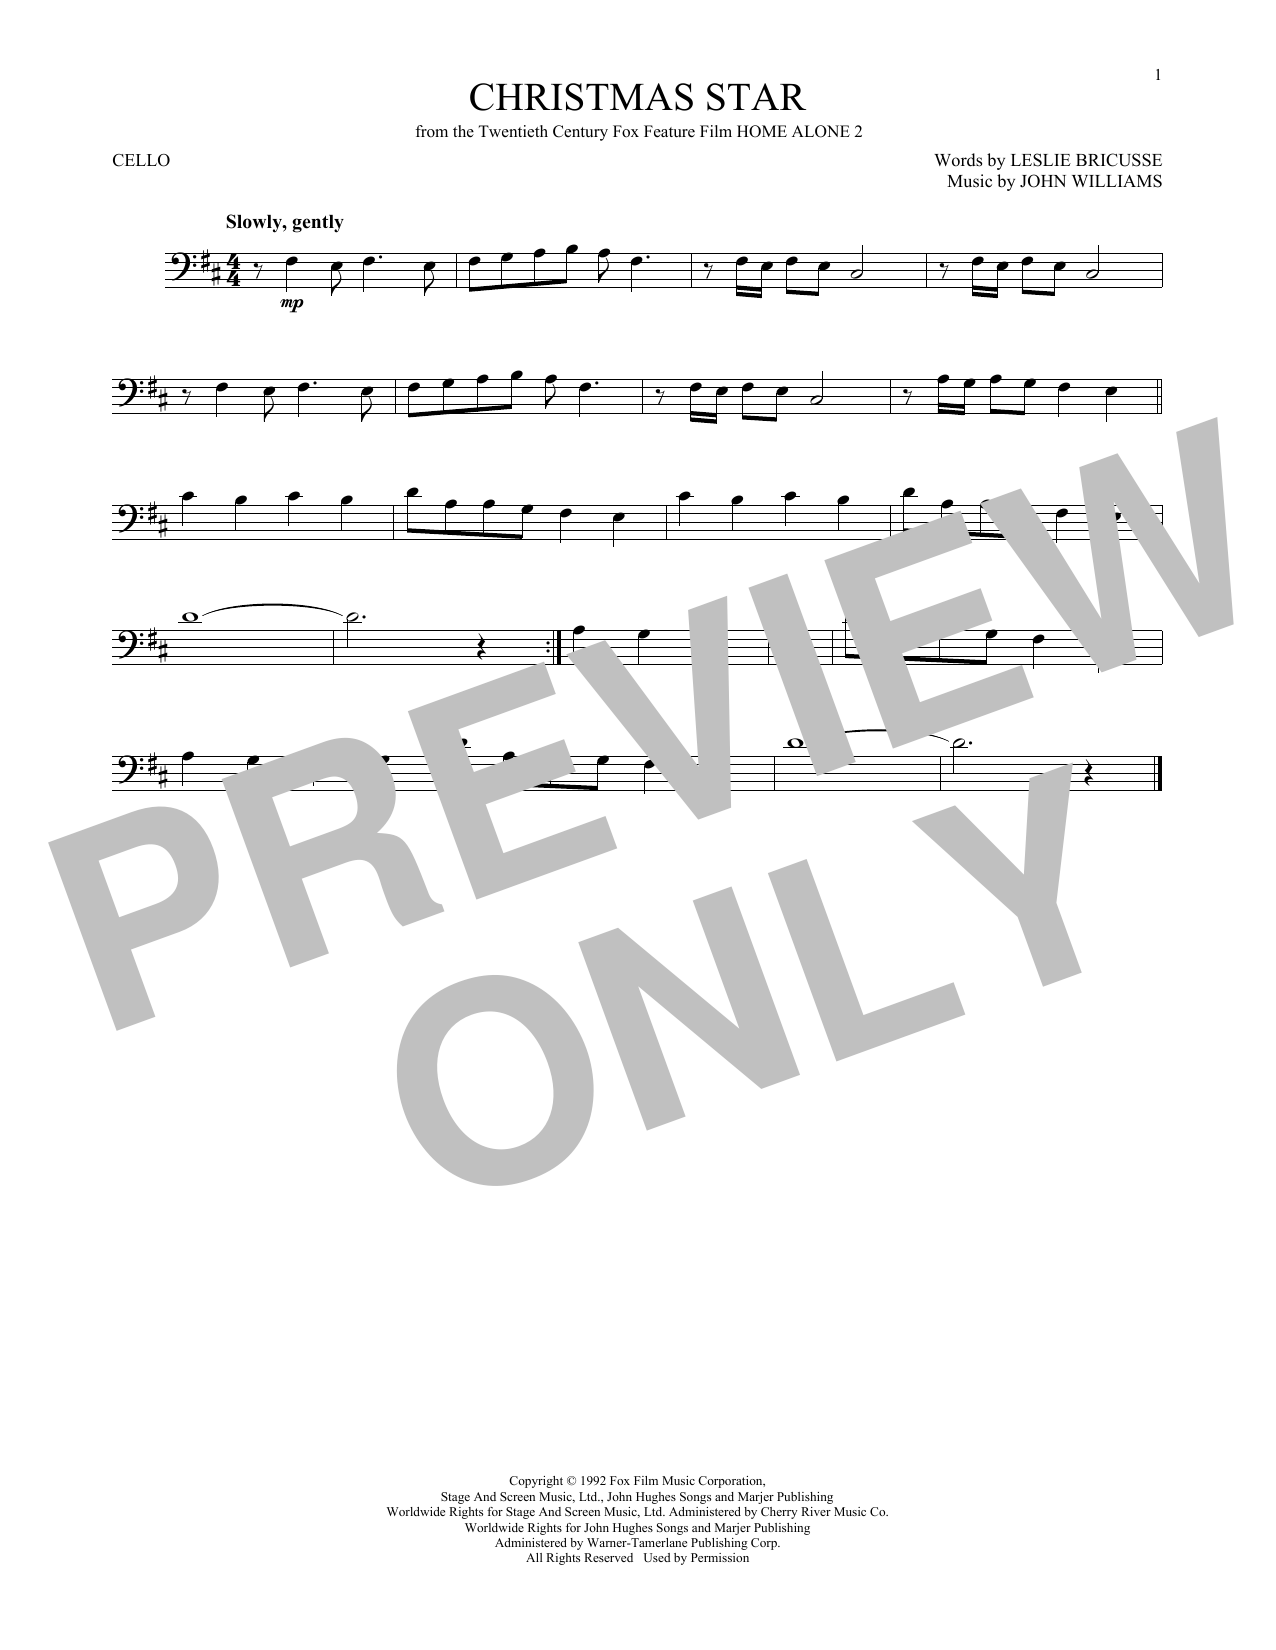 John Williams Christmas Star Sheet Music Notes & Chords for Tenor Saxophone - Download or Print PDF